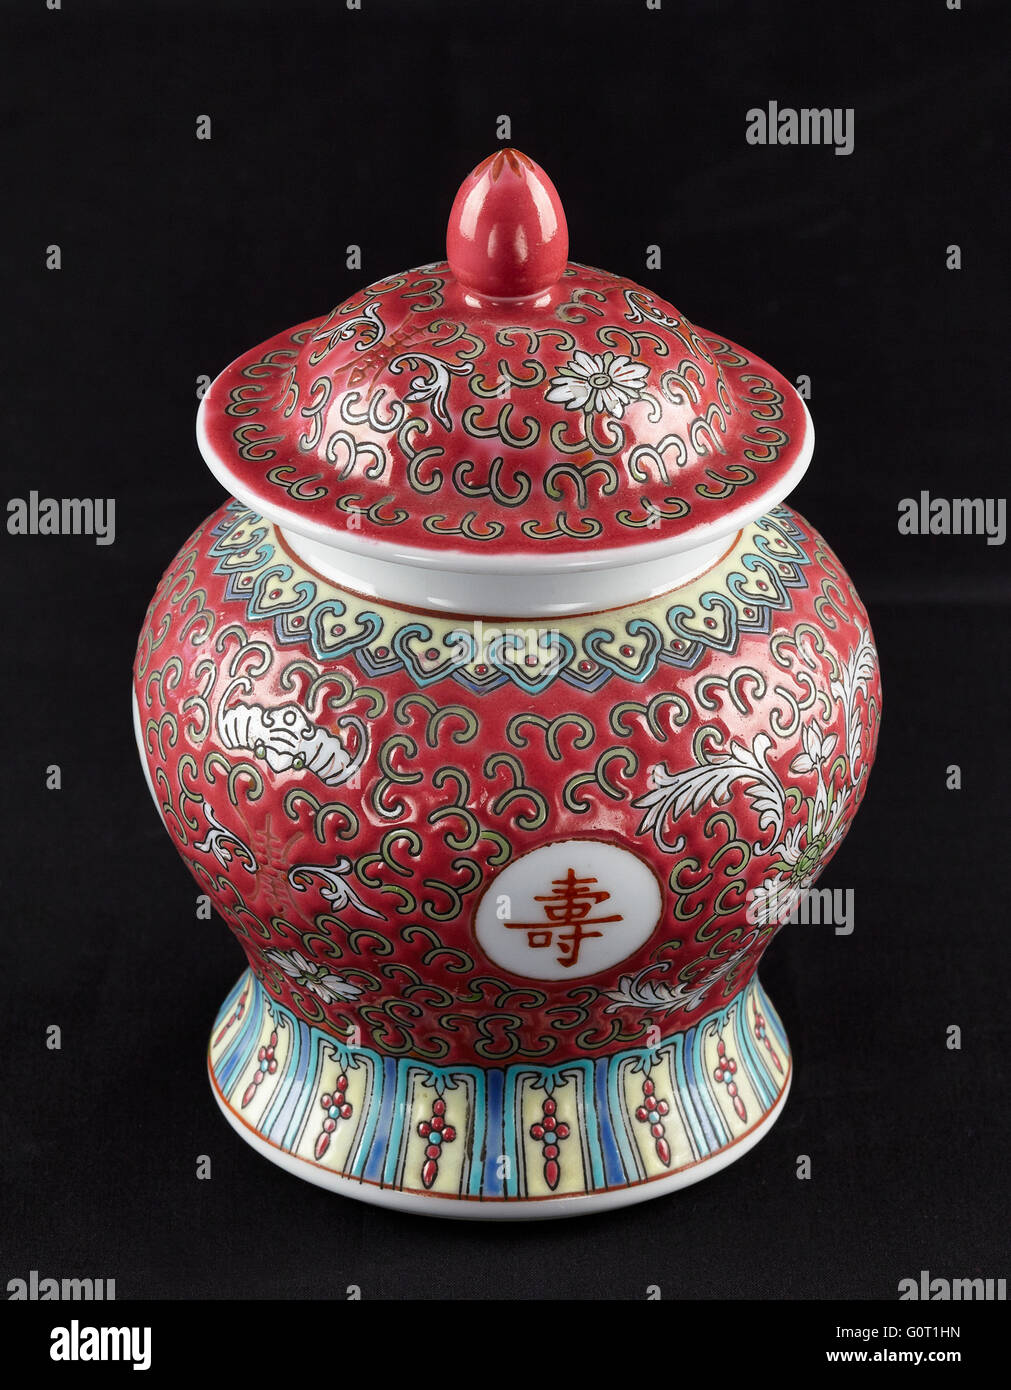 Tibor made in glazed porcelain. China. Asia. Stock Photo